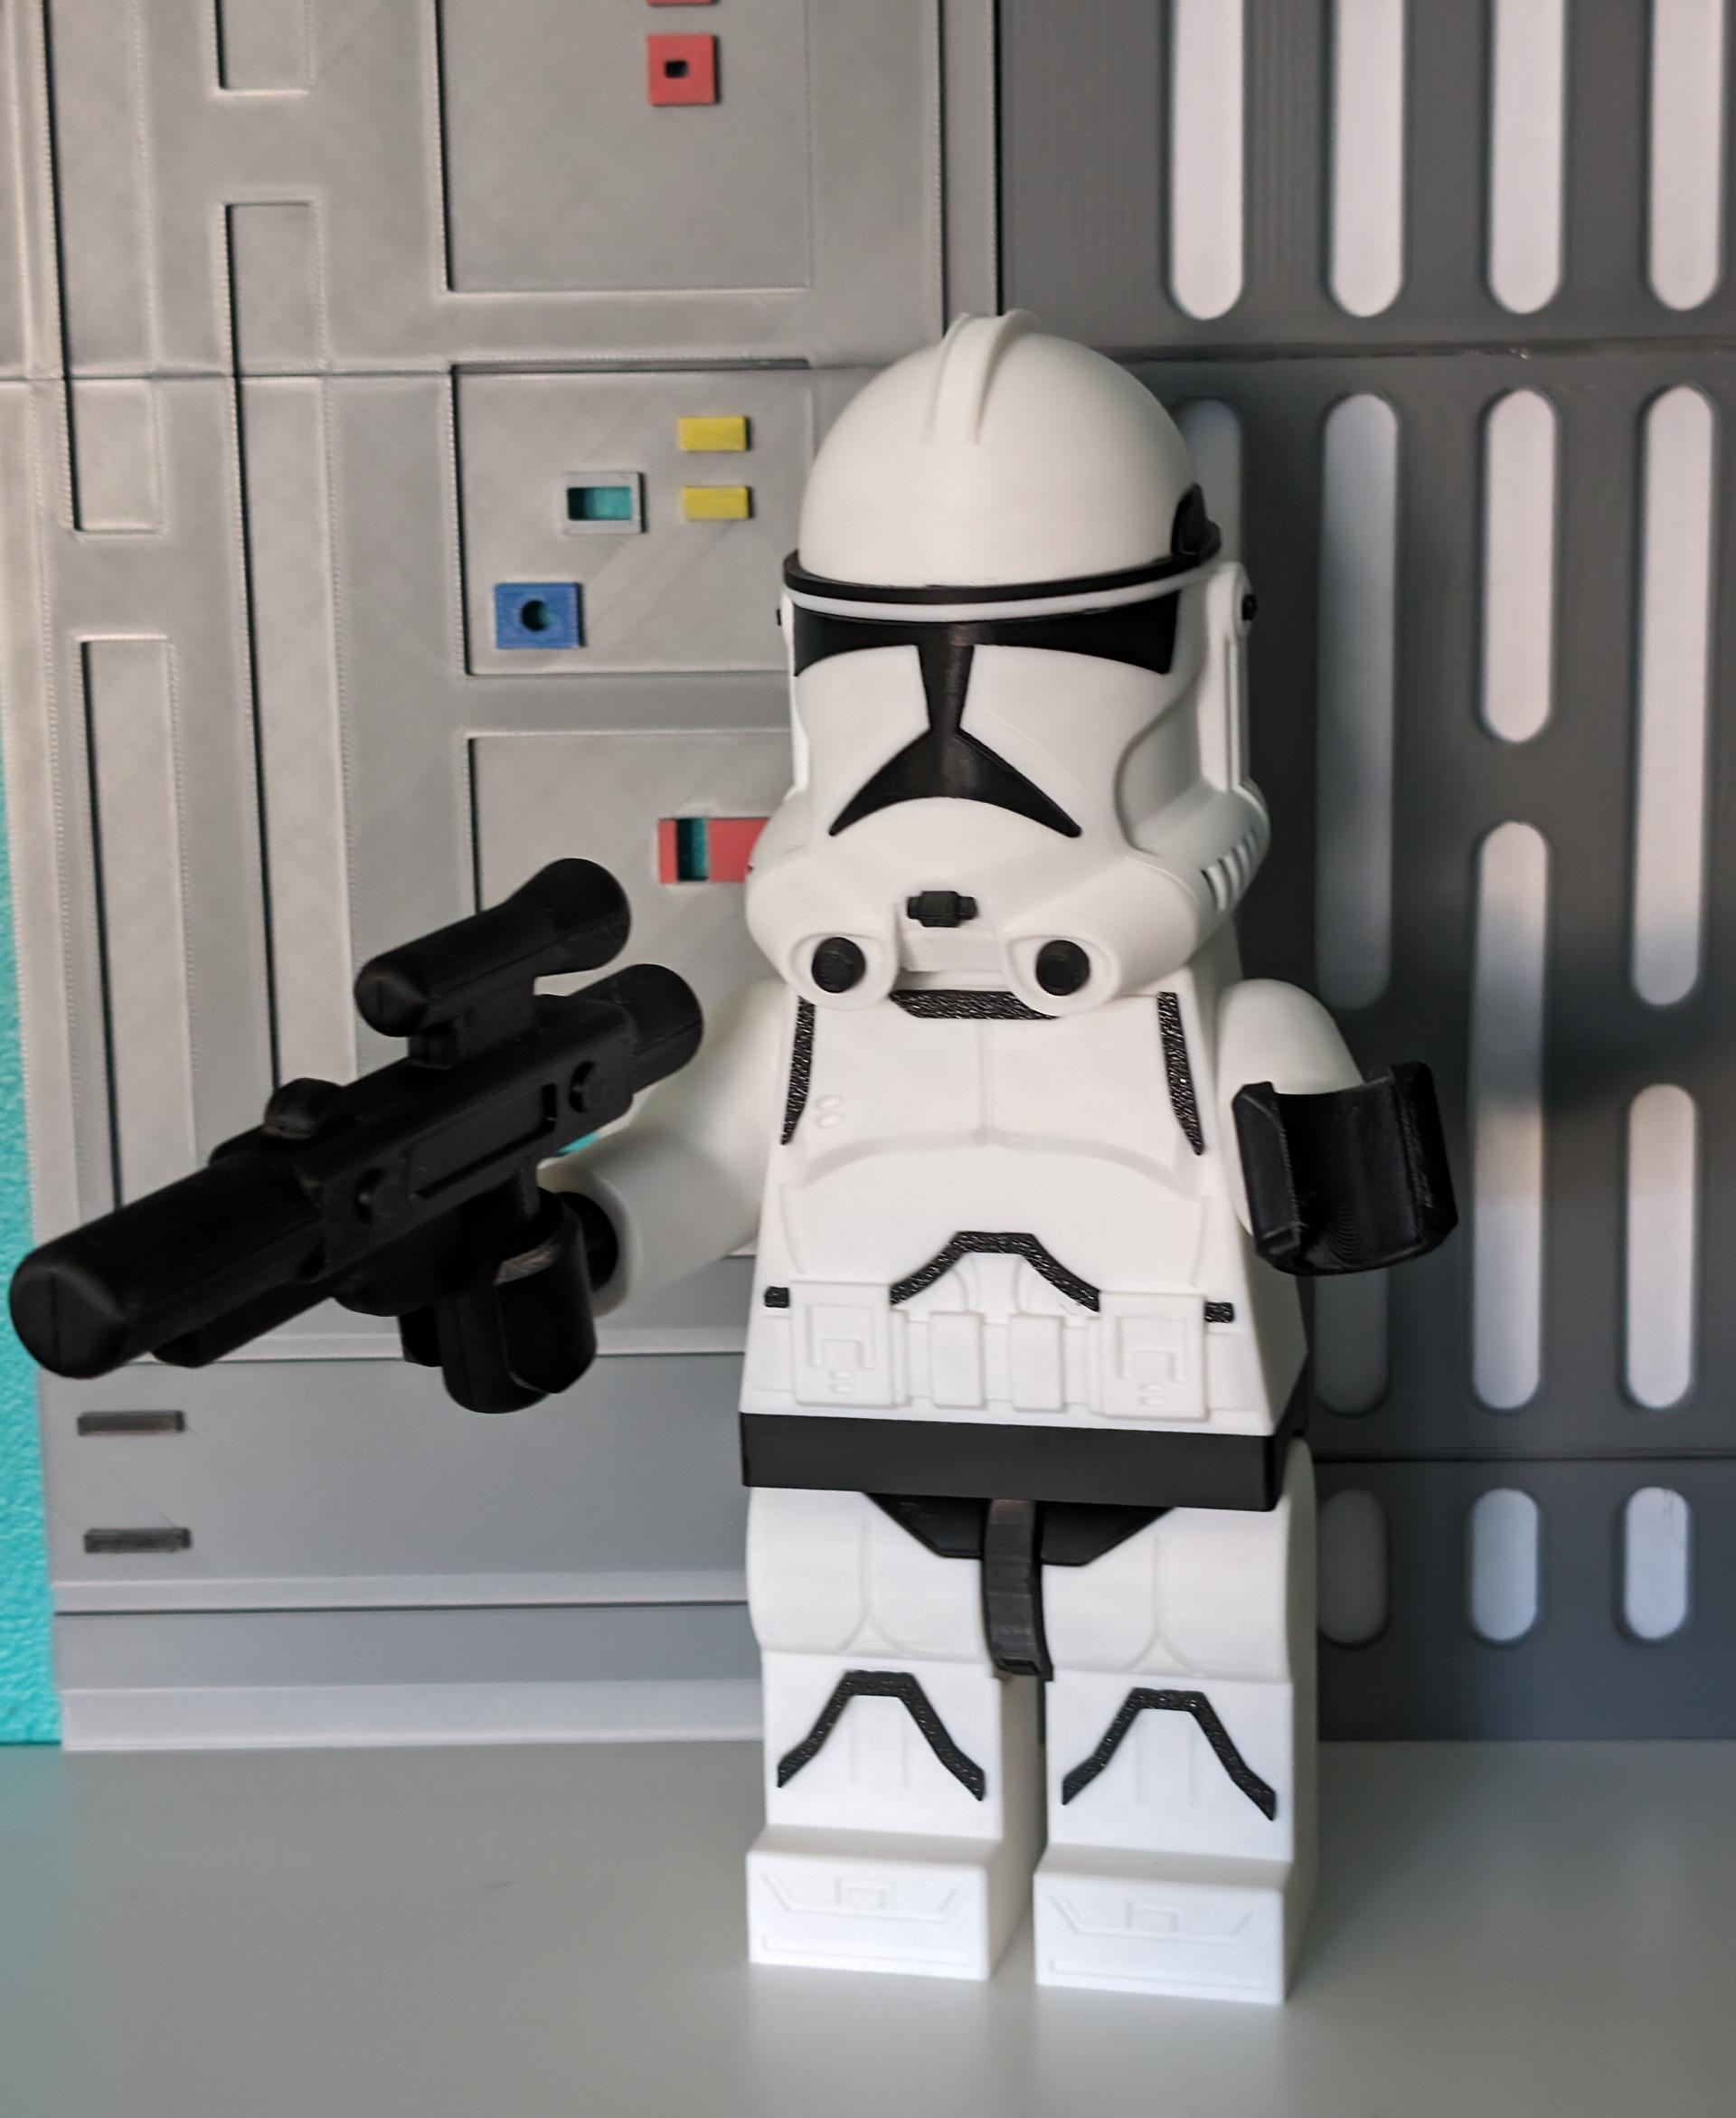 Clone Trooper - Phase II (6:1 LEGO-inspired brick figure, NO MMU/AMS, NO supports, NO glue) - Pew Pew Pew - 3d model